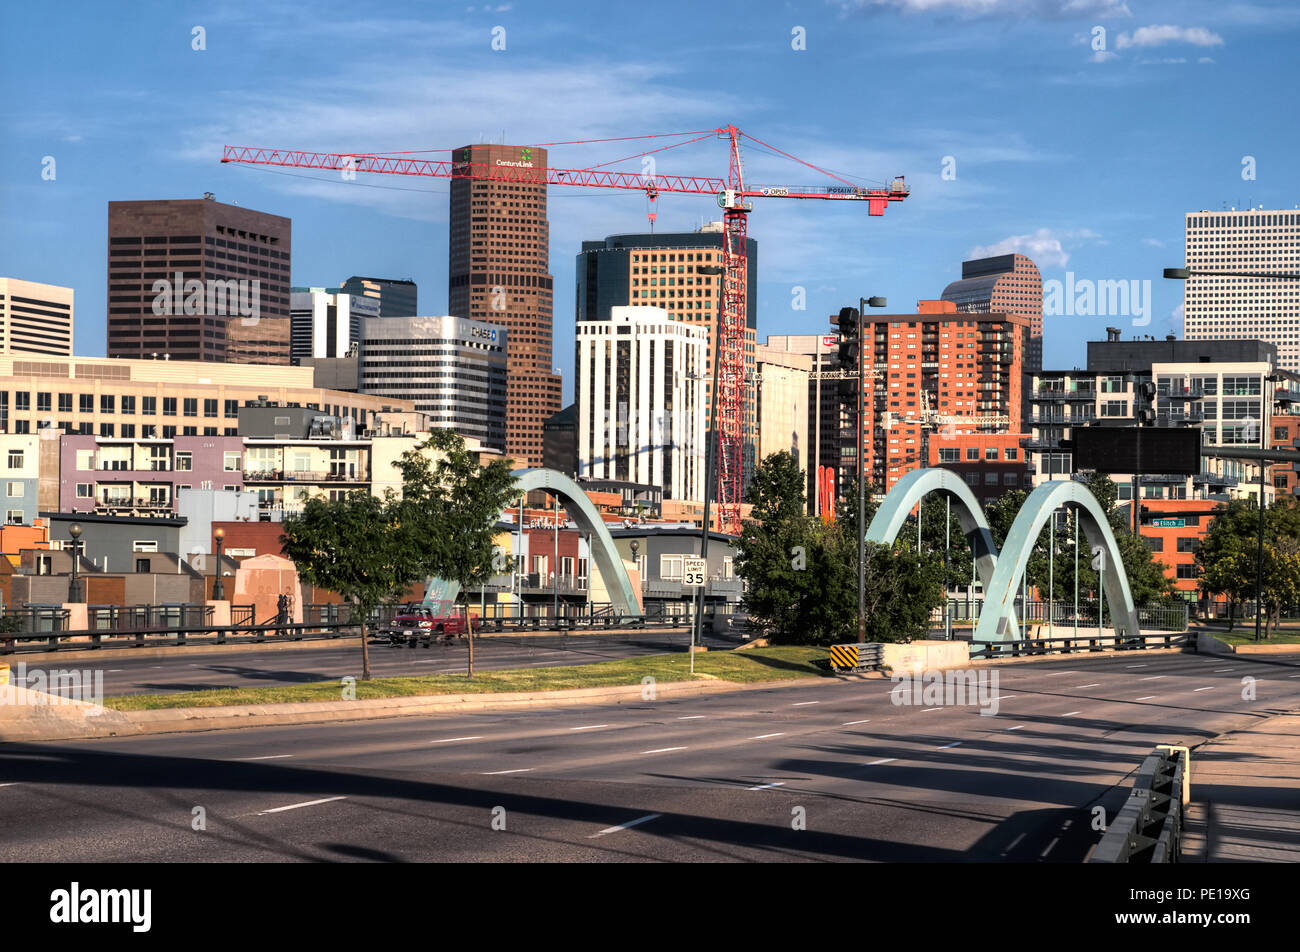 Construction cranes dot the downtown Denver skyline.  Downtown Denver seen from the Speer Blvd overpass. Stock Photo